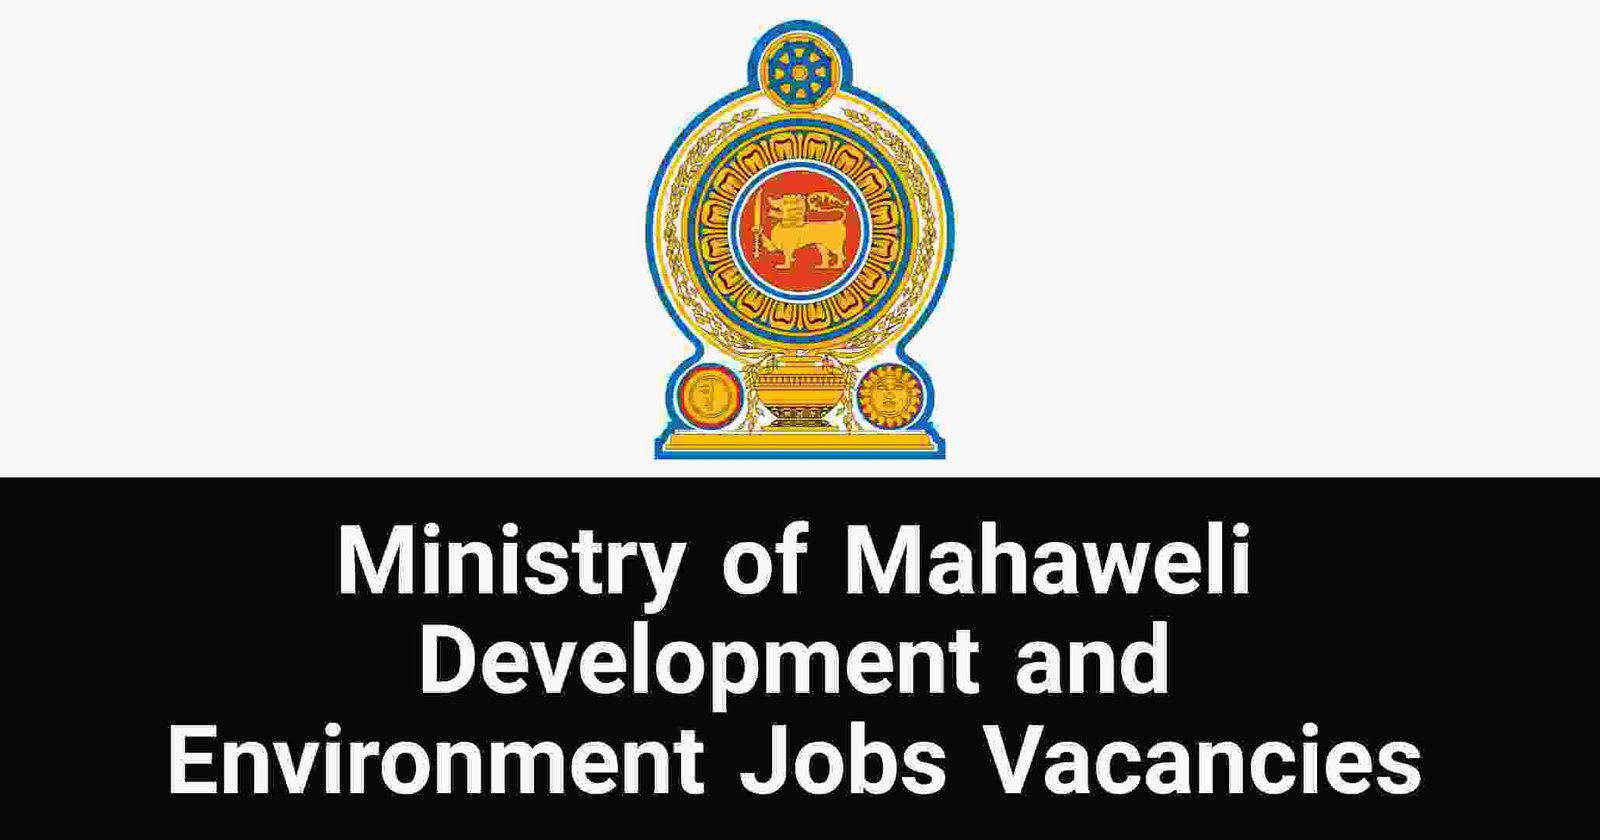 Ministry of Mahaweli Development and Environment Jobs Vacancies Careers